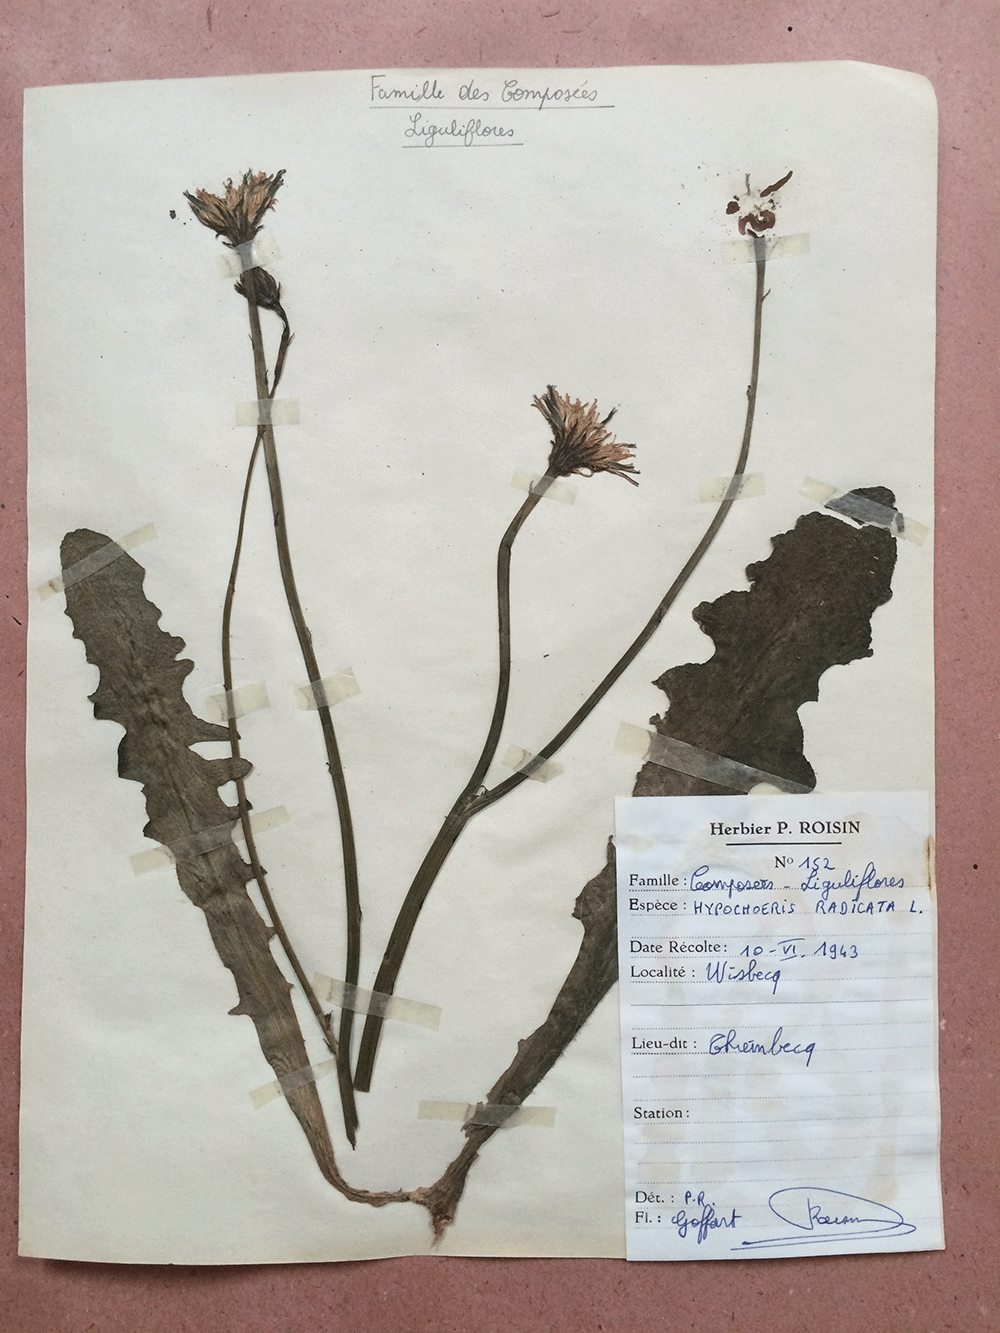 http://www.thepaperfleamarket.com/french-herbarium.html